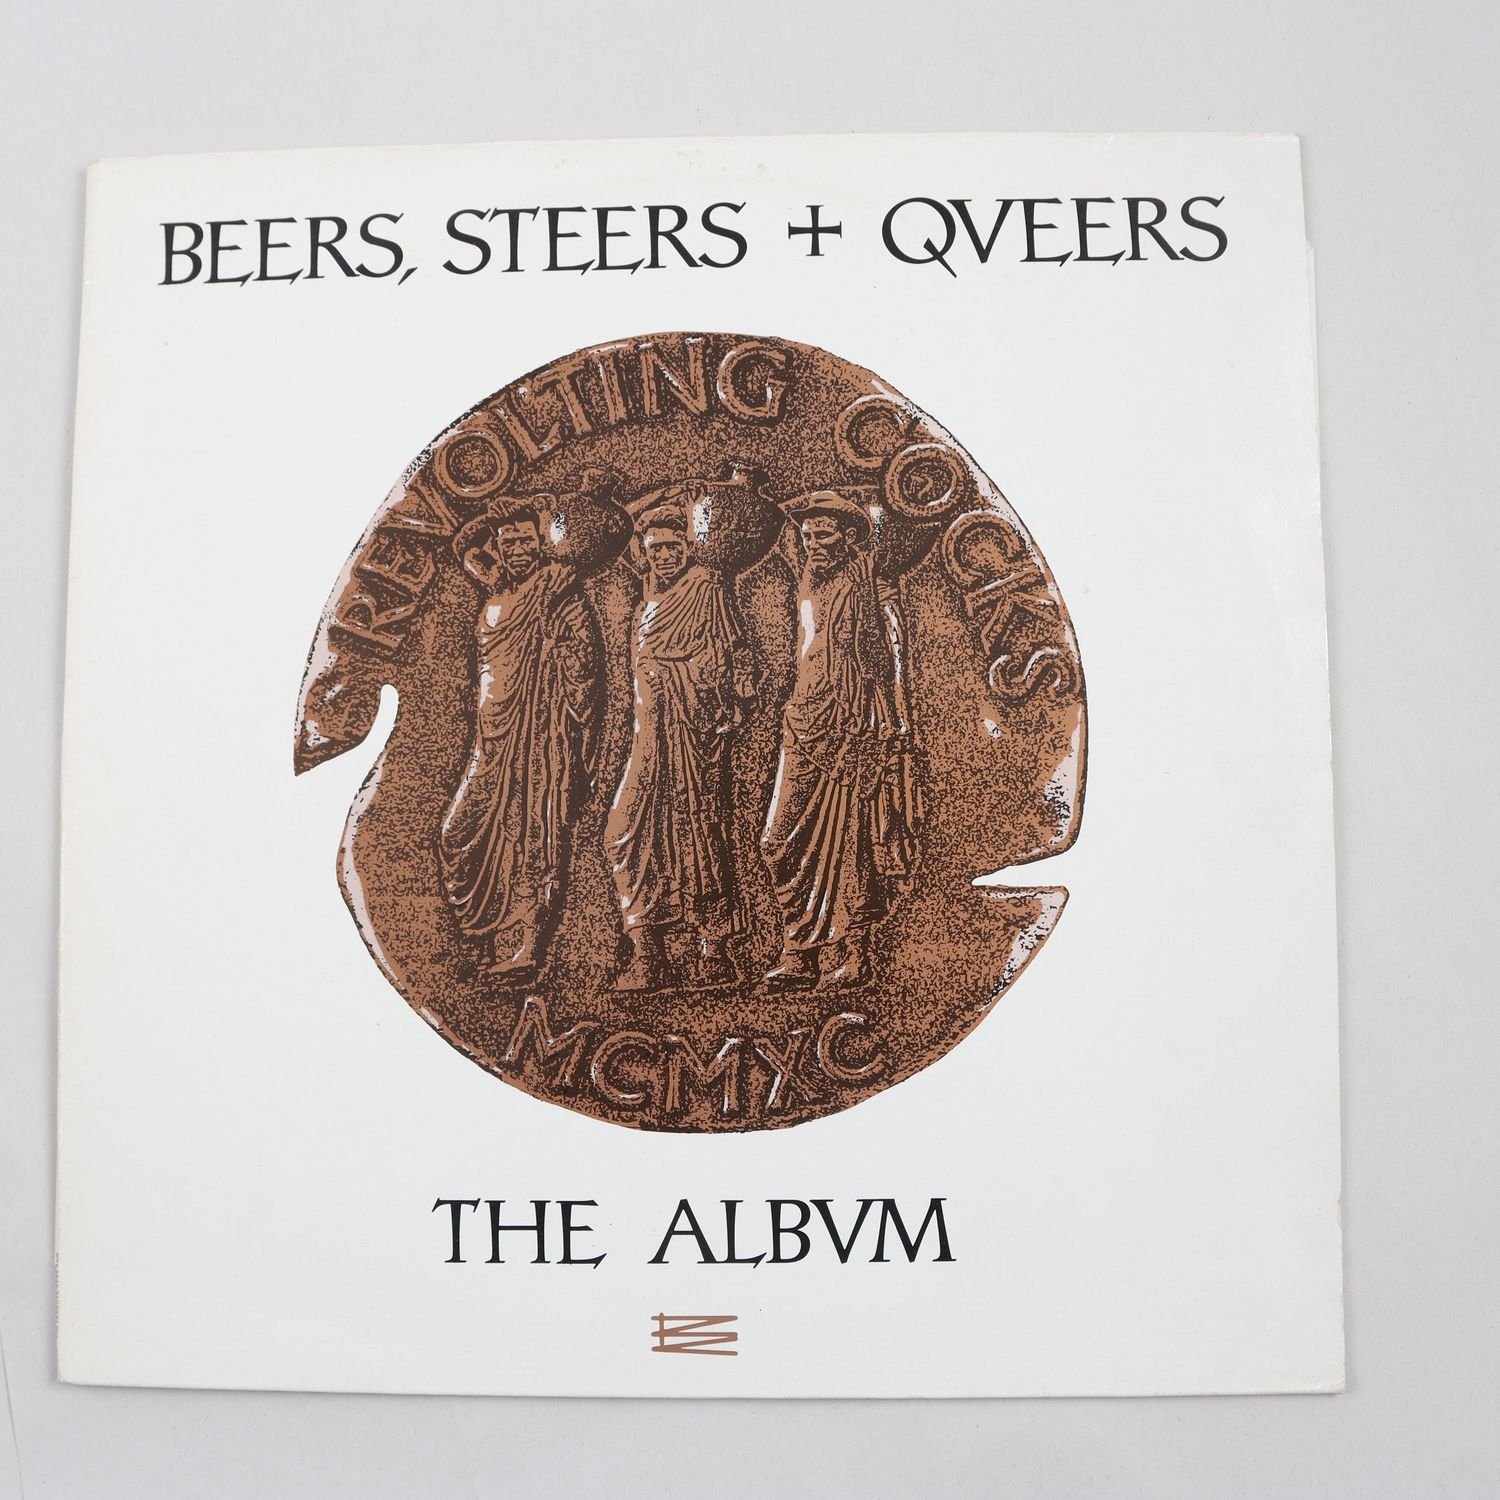 LP Revolting Cocks, Beers, Steers + Queers (The Album)